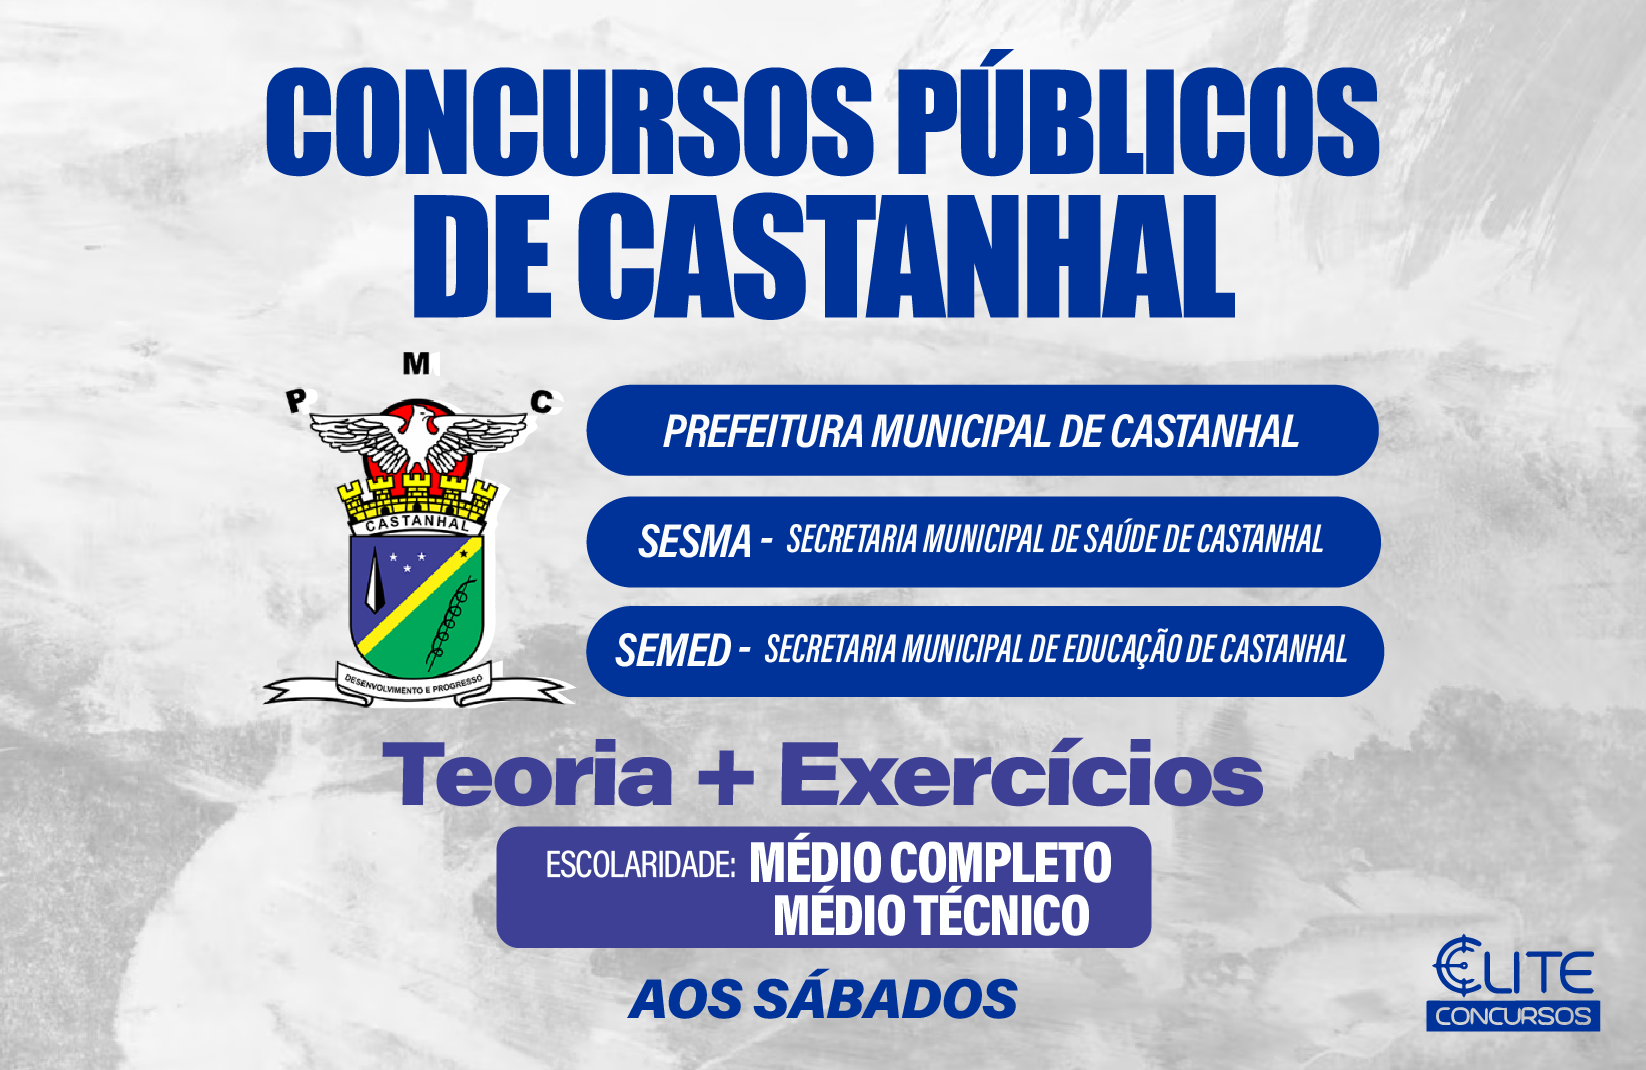 Prefeitura Municipal de Castanhal - PMC, SESMA E SEMED - M�dio Completo e M�dio T�cnico - 06/04